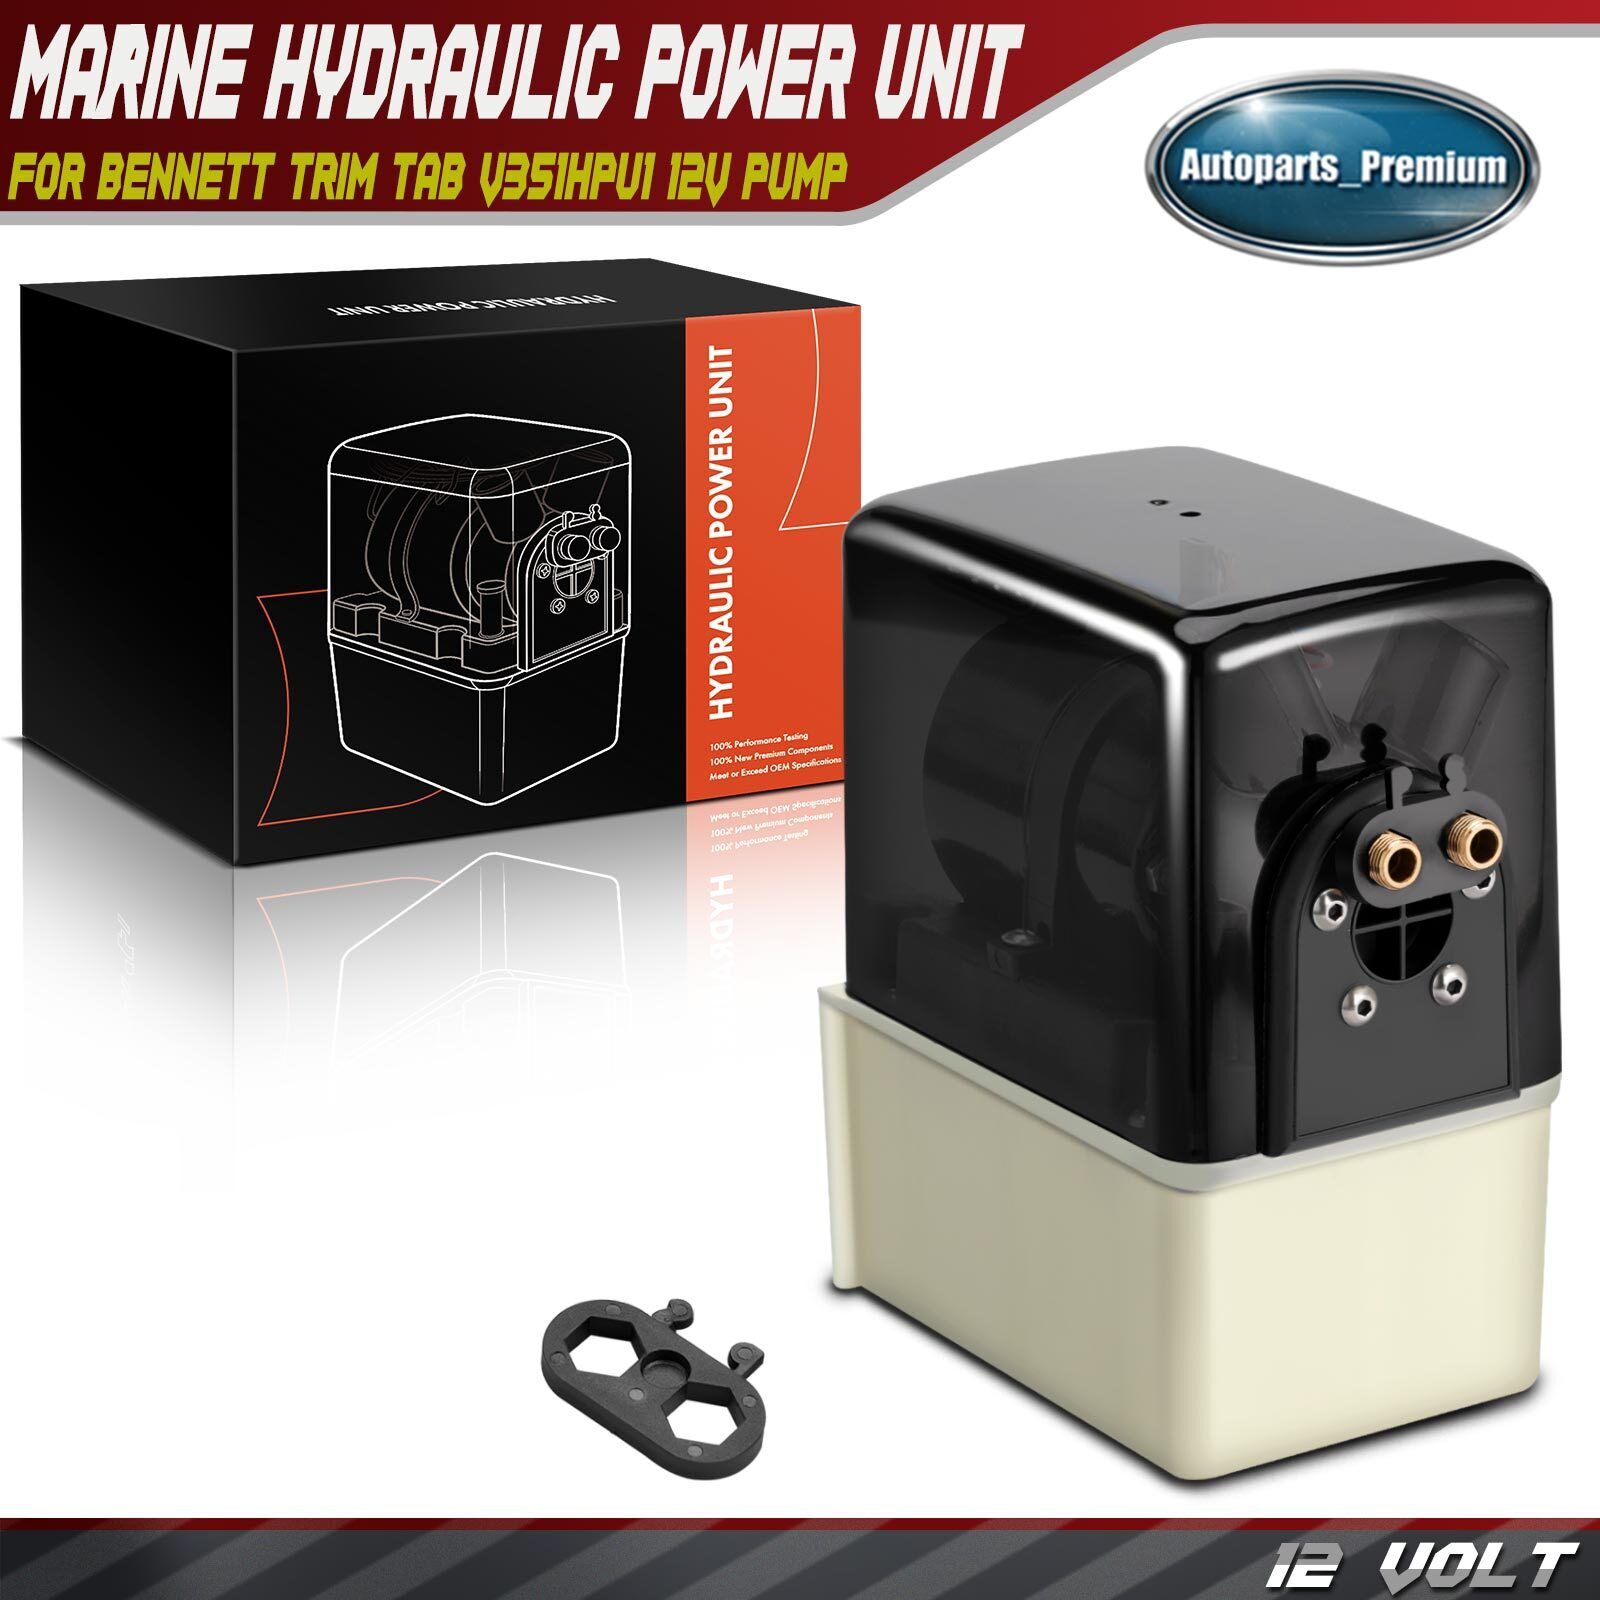 New Marine Hydraulic Power Unit for Bennett Trim Tab V351HPU1 12V (12 Volt) Pump